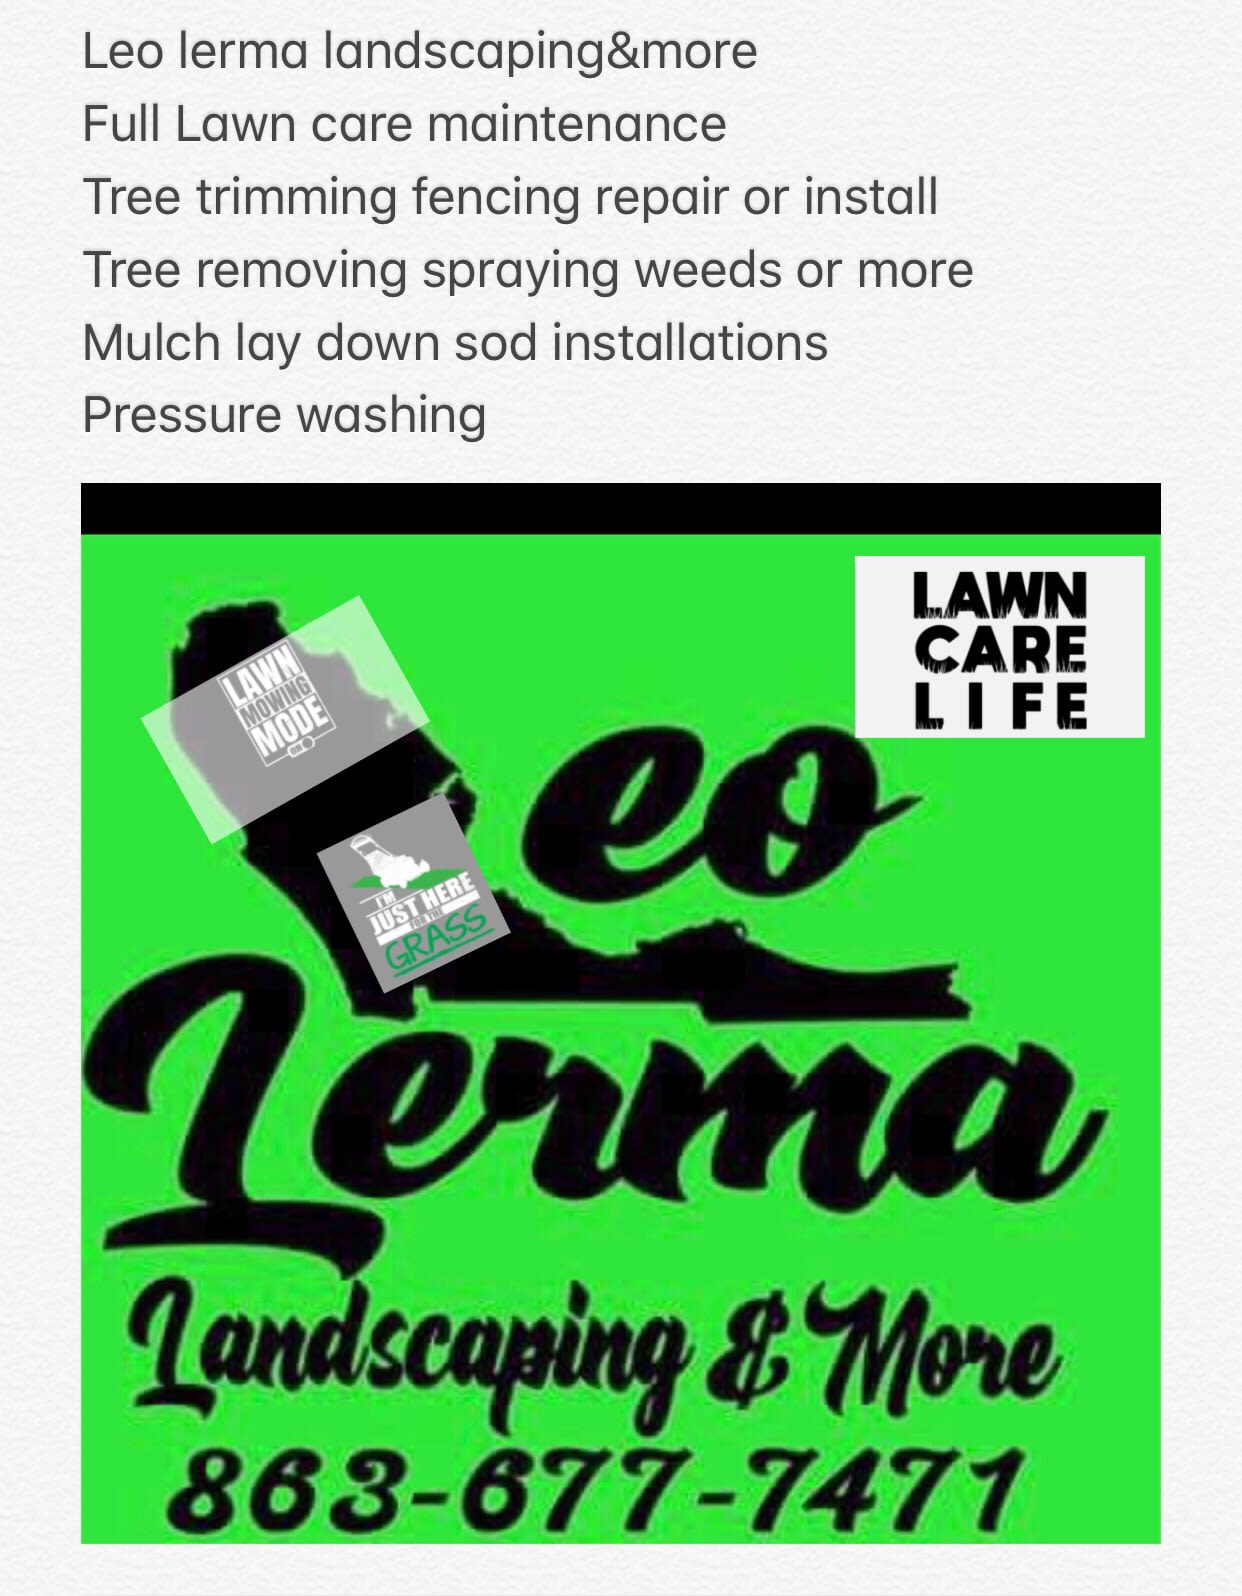 Leo Lerma Landscaping